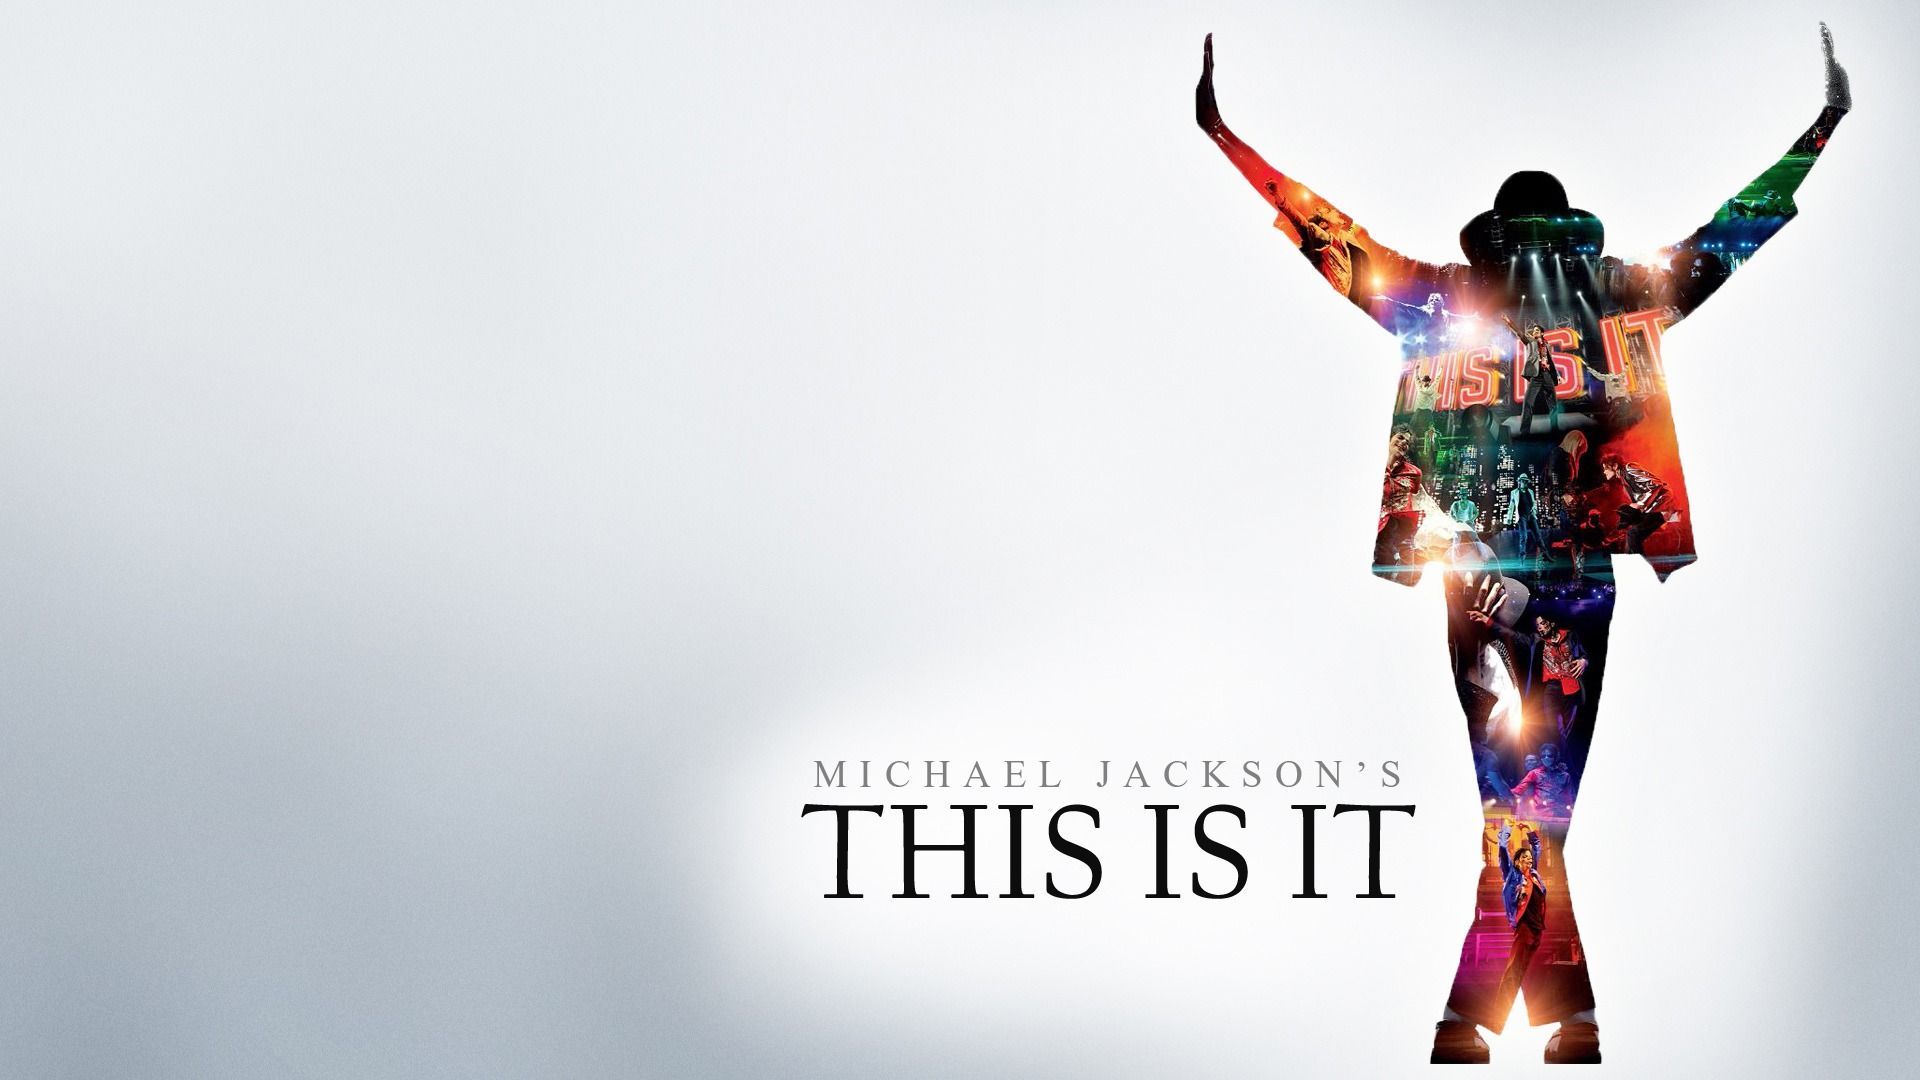 Michael Jackson This Is It. movie. Michael jackson wallpaper, Michael jackson image, Michael jackson